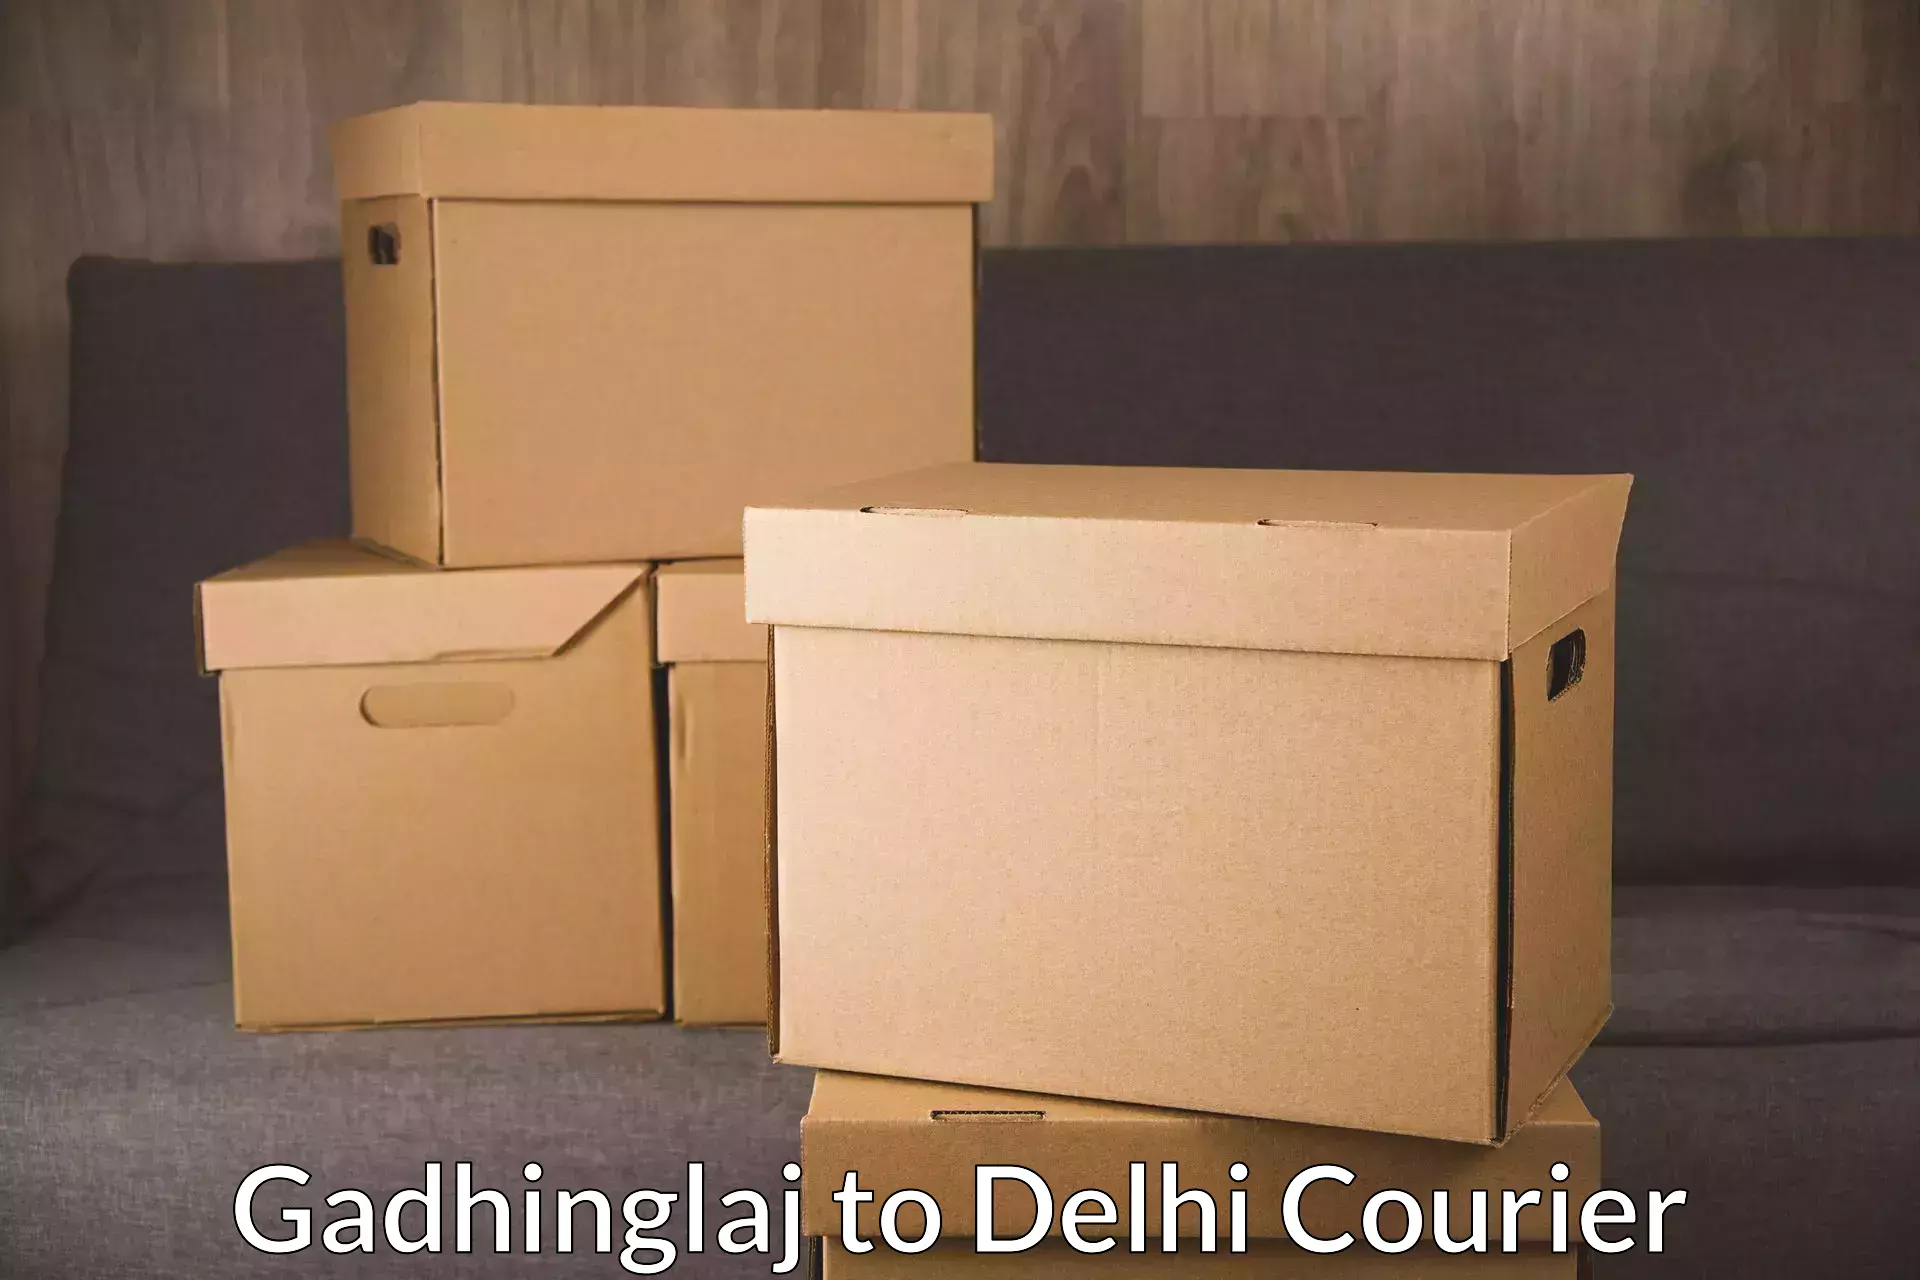 Round-the-clock parcel delivery Gadhinglaj to Delhi